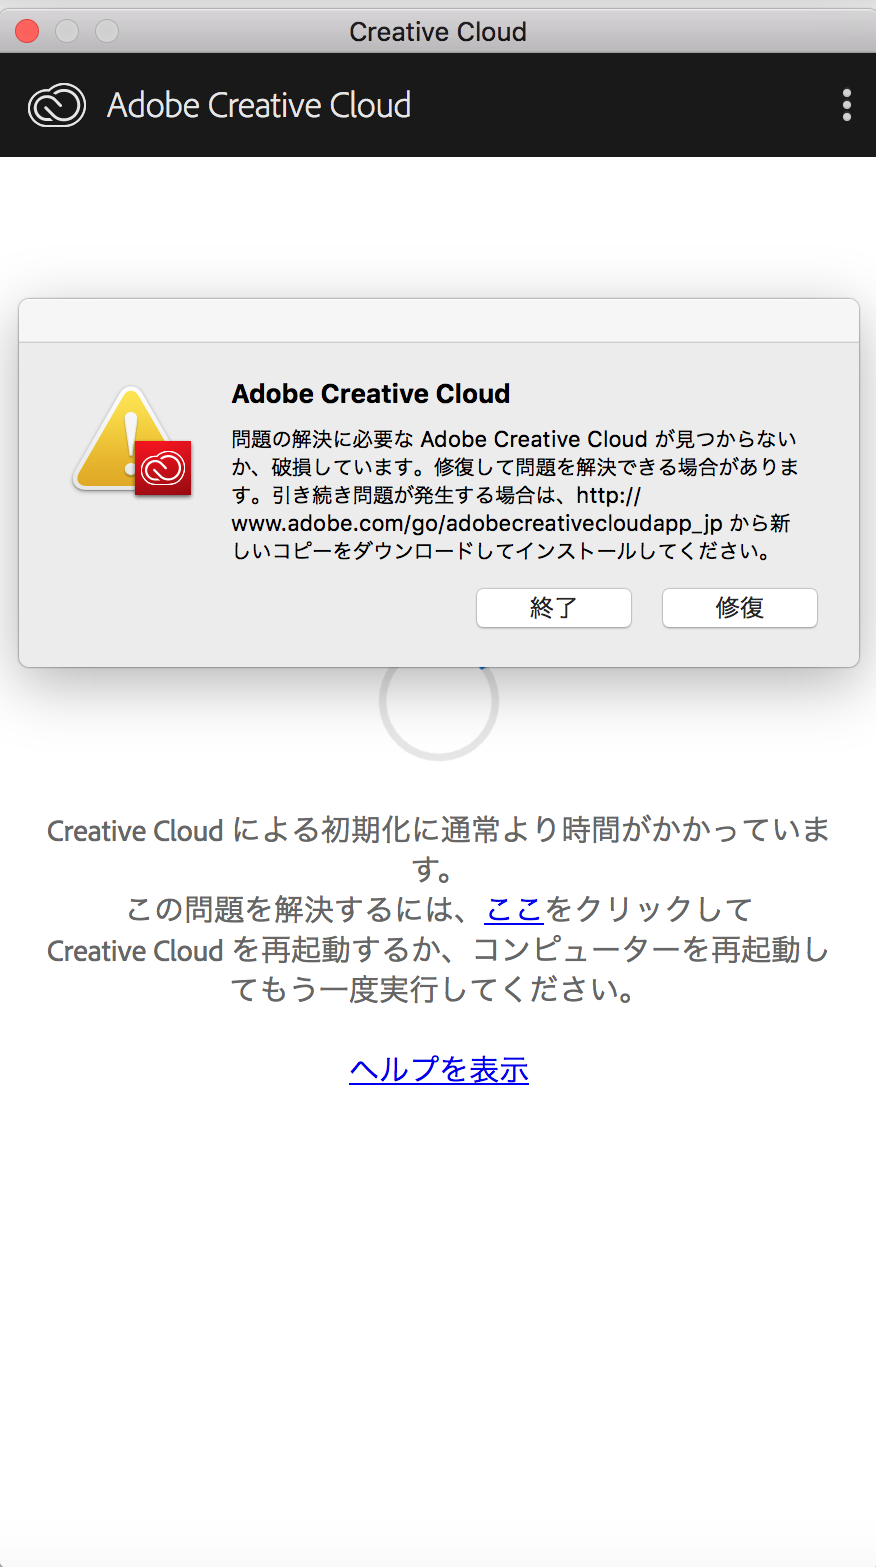 Adobeのインストールができない - Adobe Support Community - 9892083